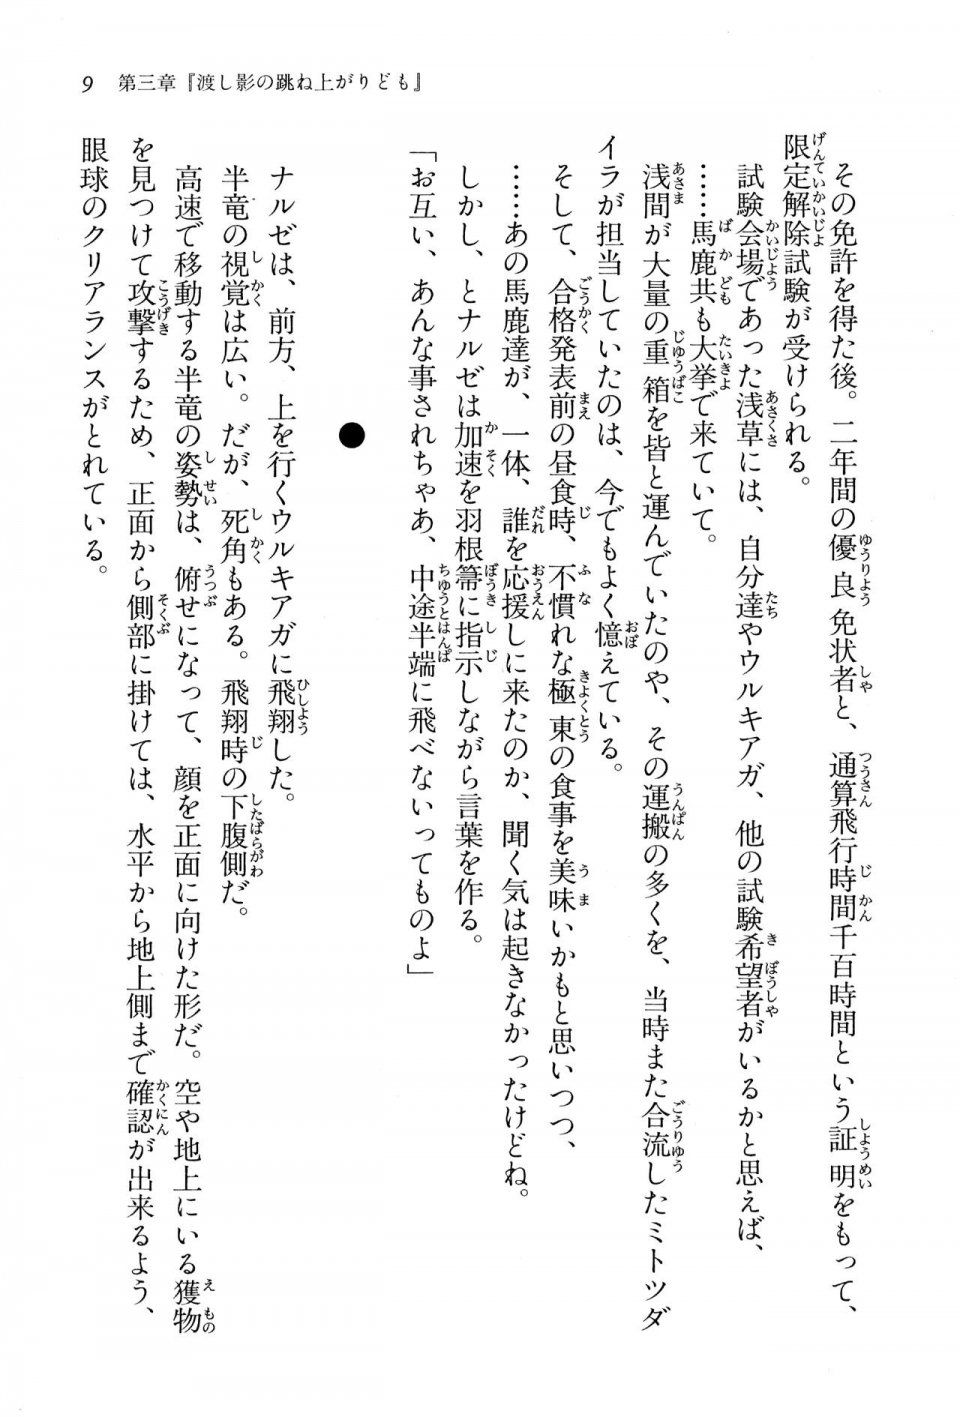 Kyoukai Senjou no Horizon BD Special Mininovel Vol 2(1B) - Photo #13